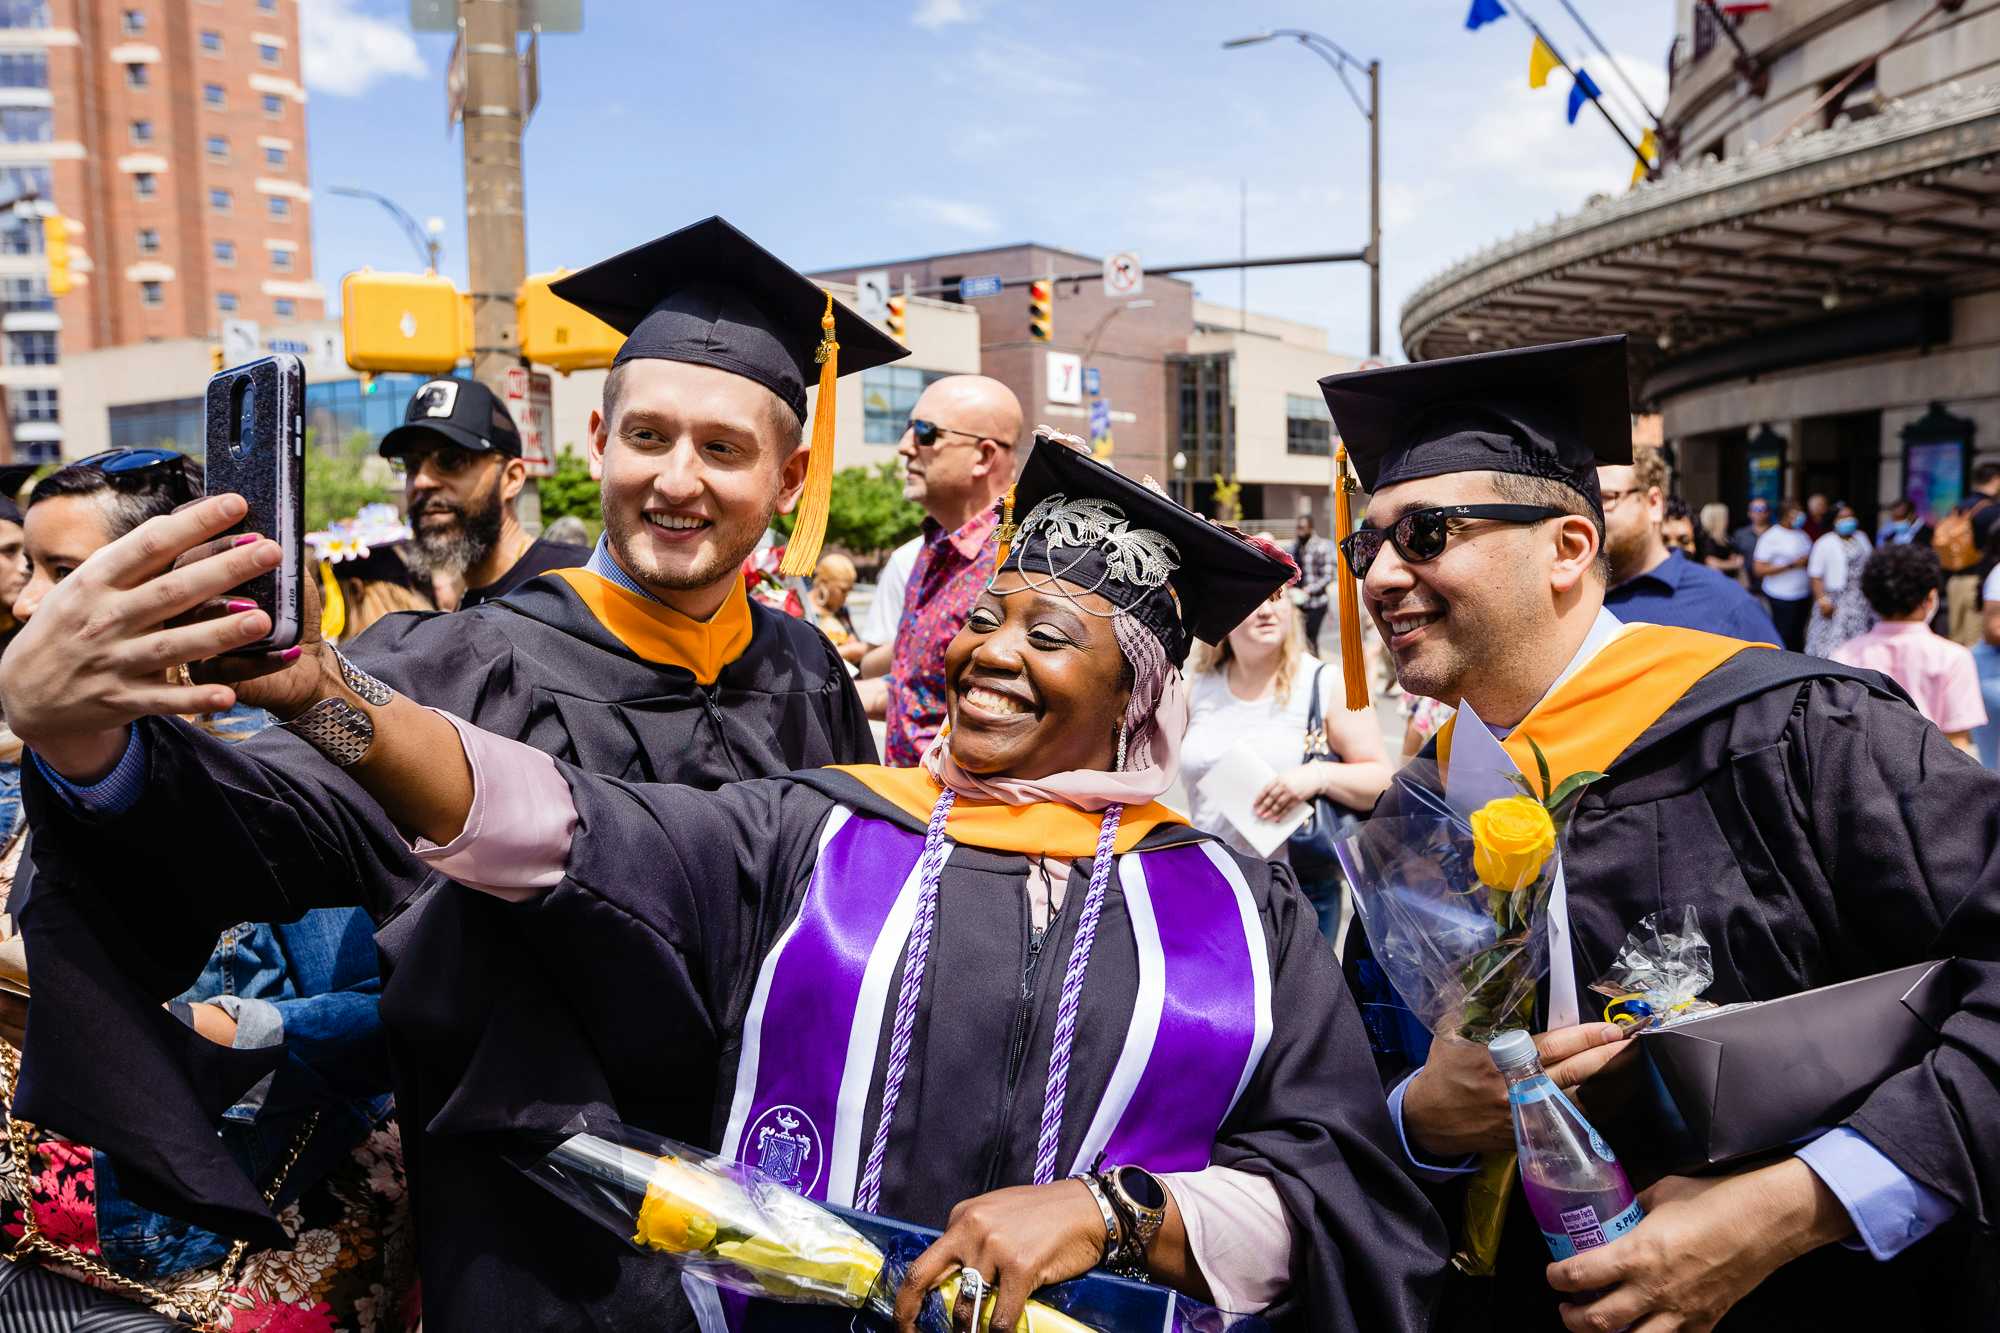 Students taking a selfie at Graduation Ceremony in Kodak Hall, Eastman Theatre